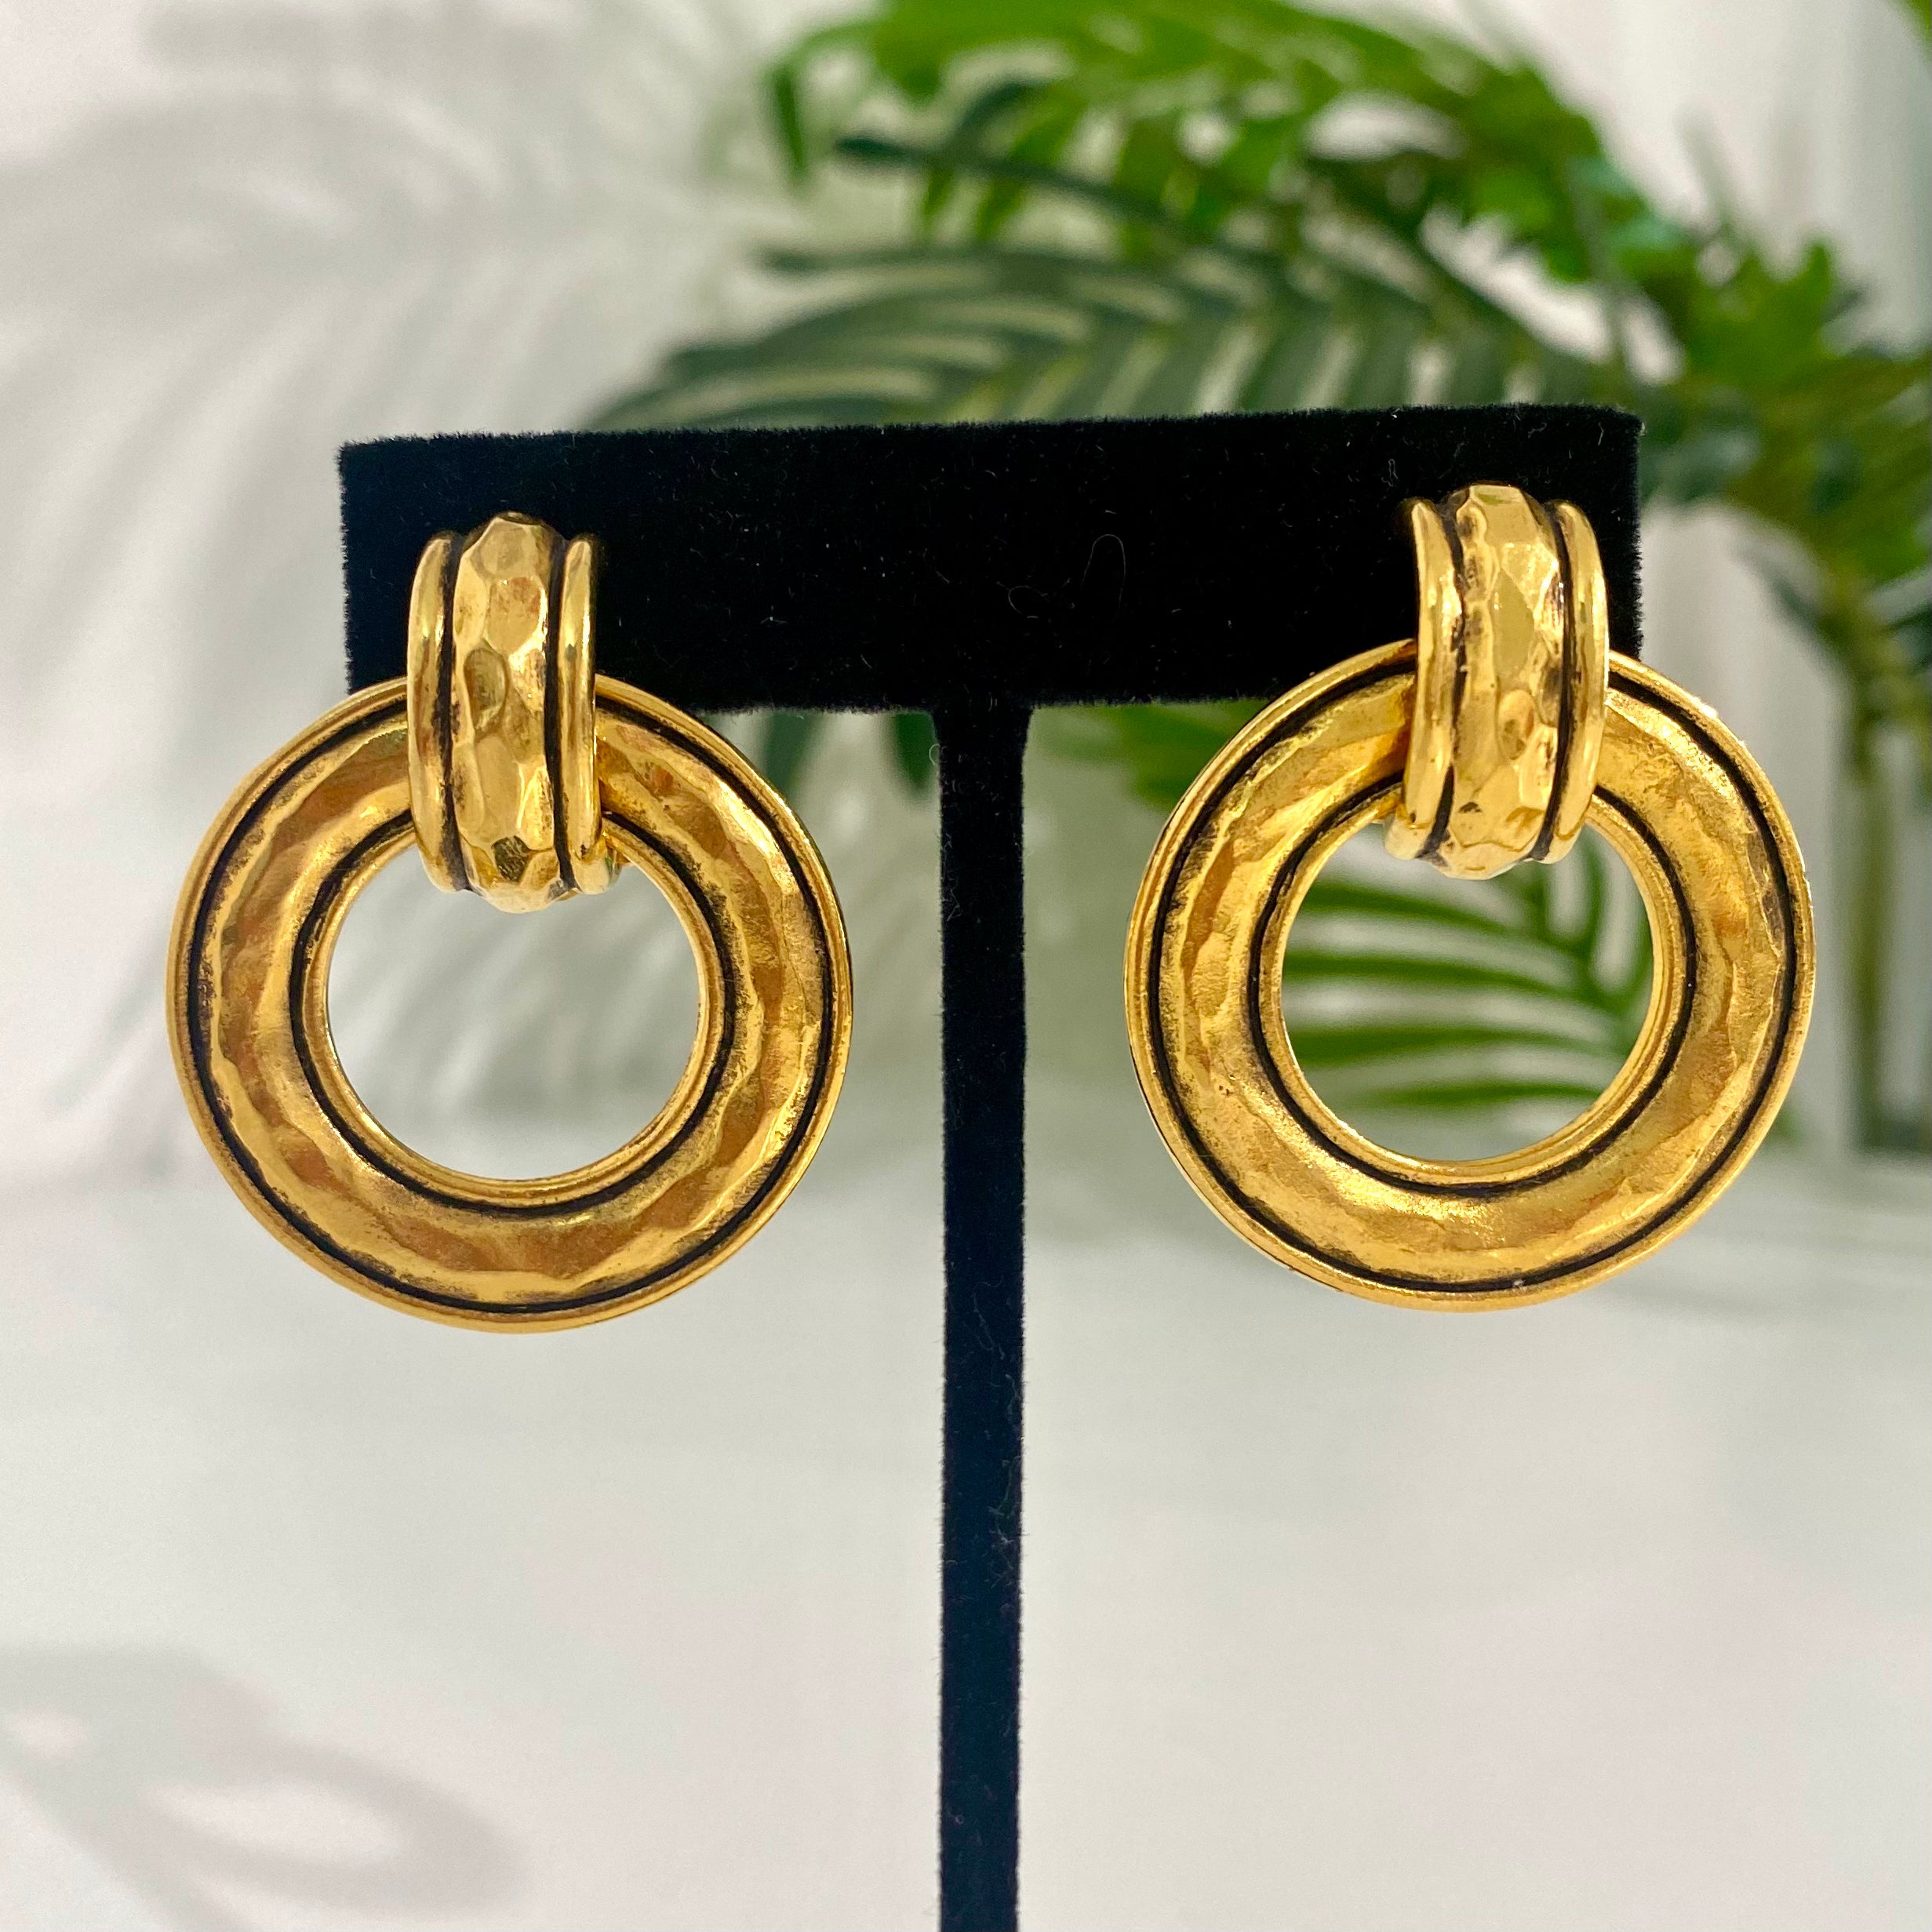 Chanel Logo Earrings C-Hoop Gold-Plated